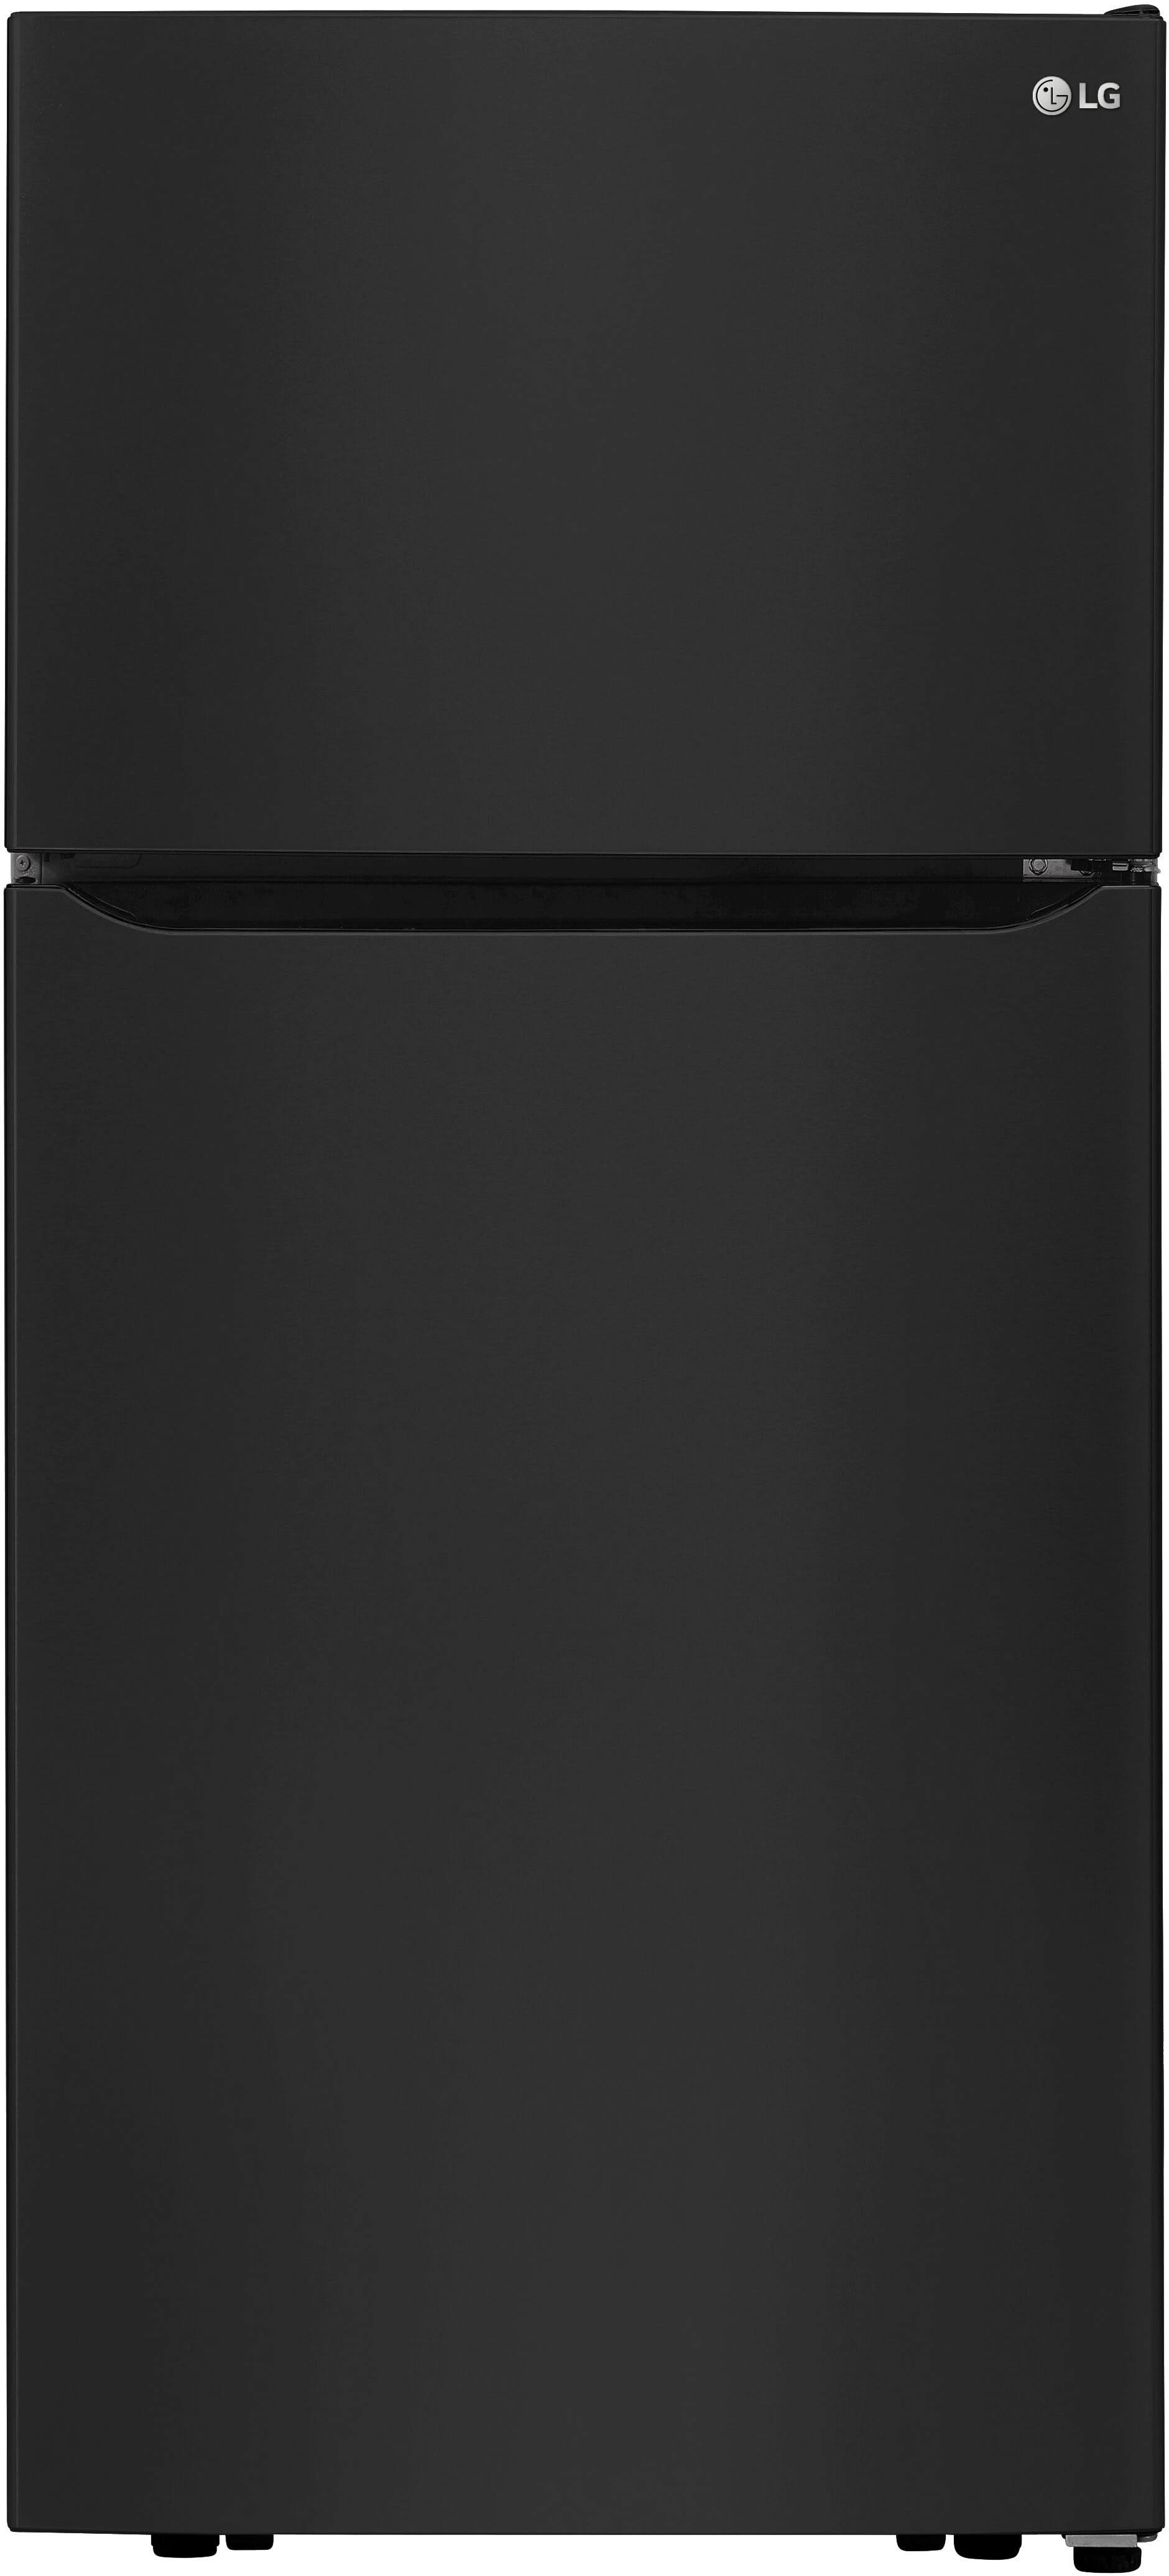 Environmentally Friendly 20 Cu. Ft. Black Top Freezer Refrigerator | Image